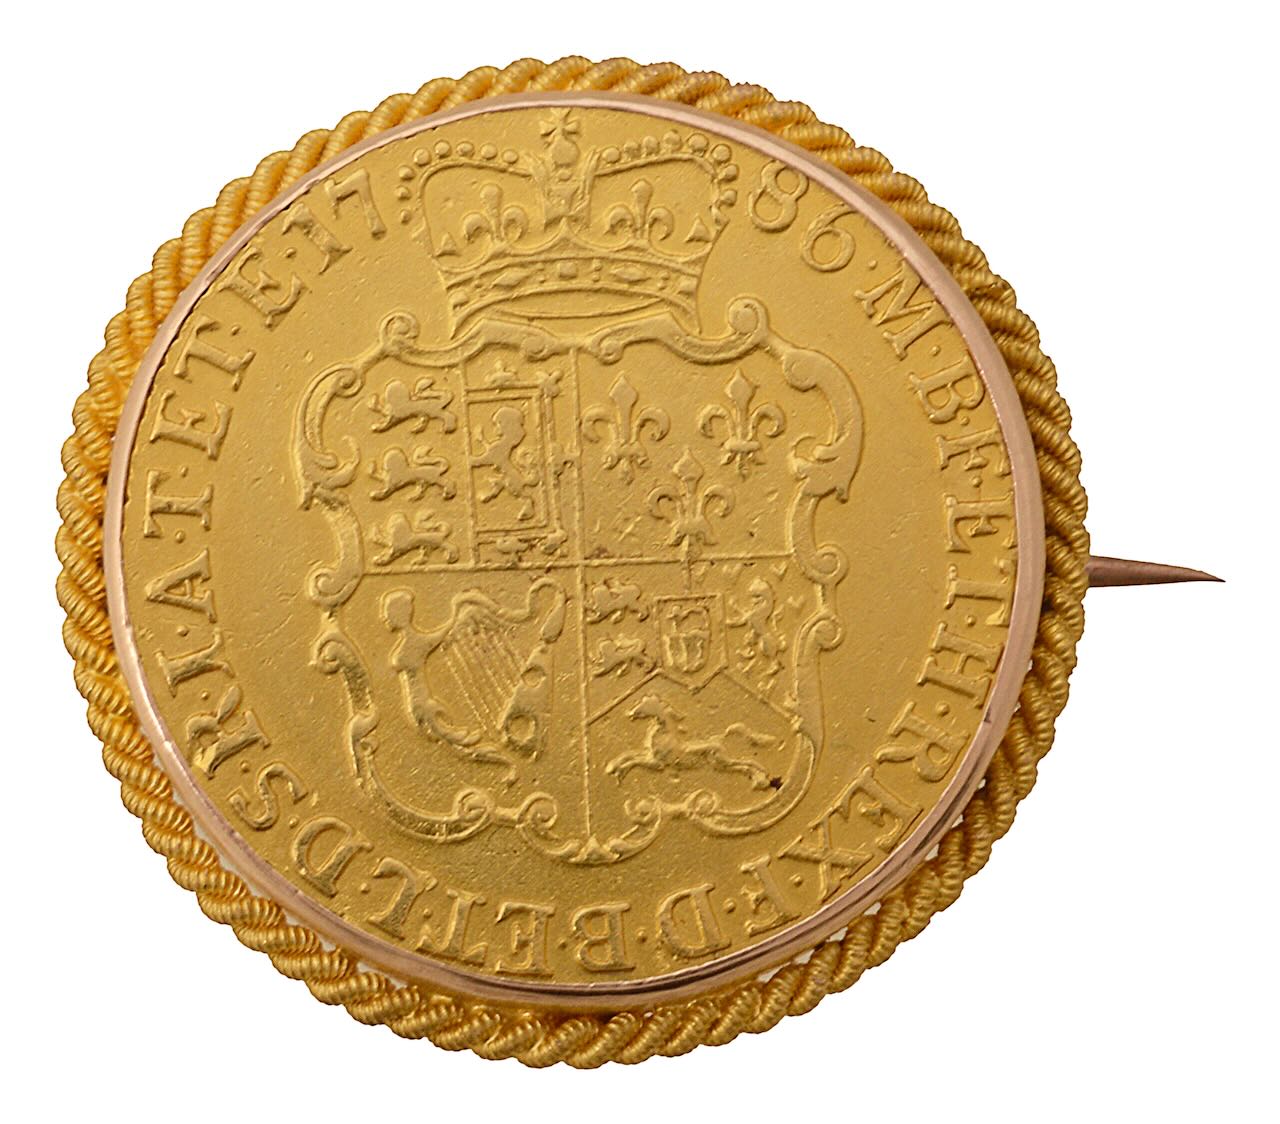 A George III Guinea brooch, dated 1786